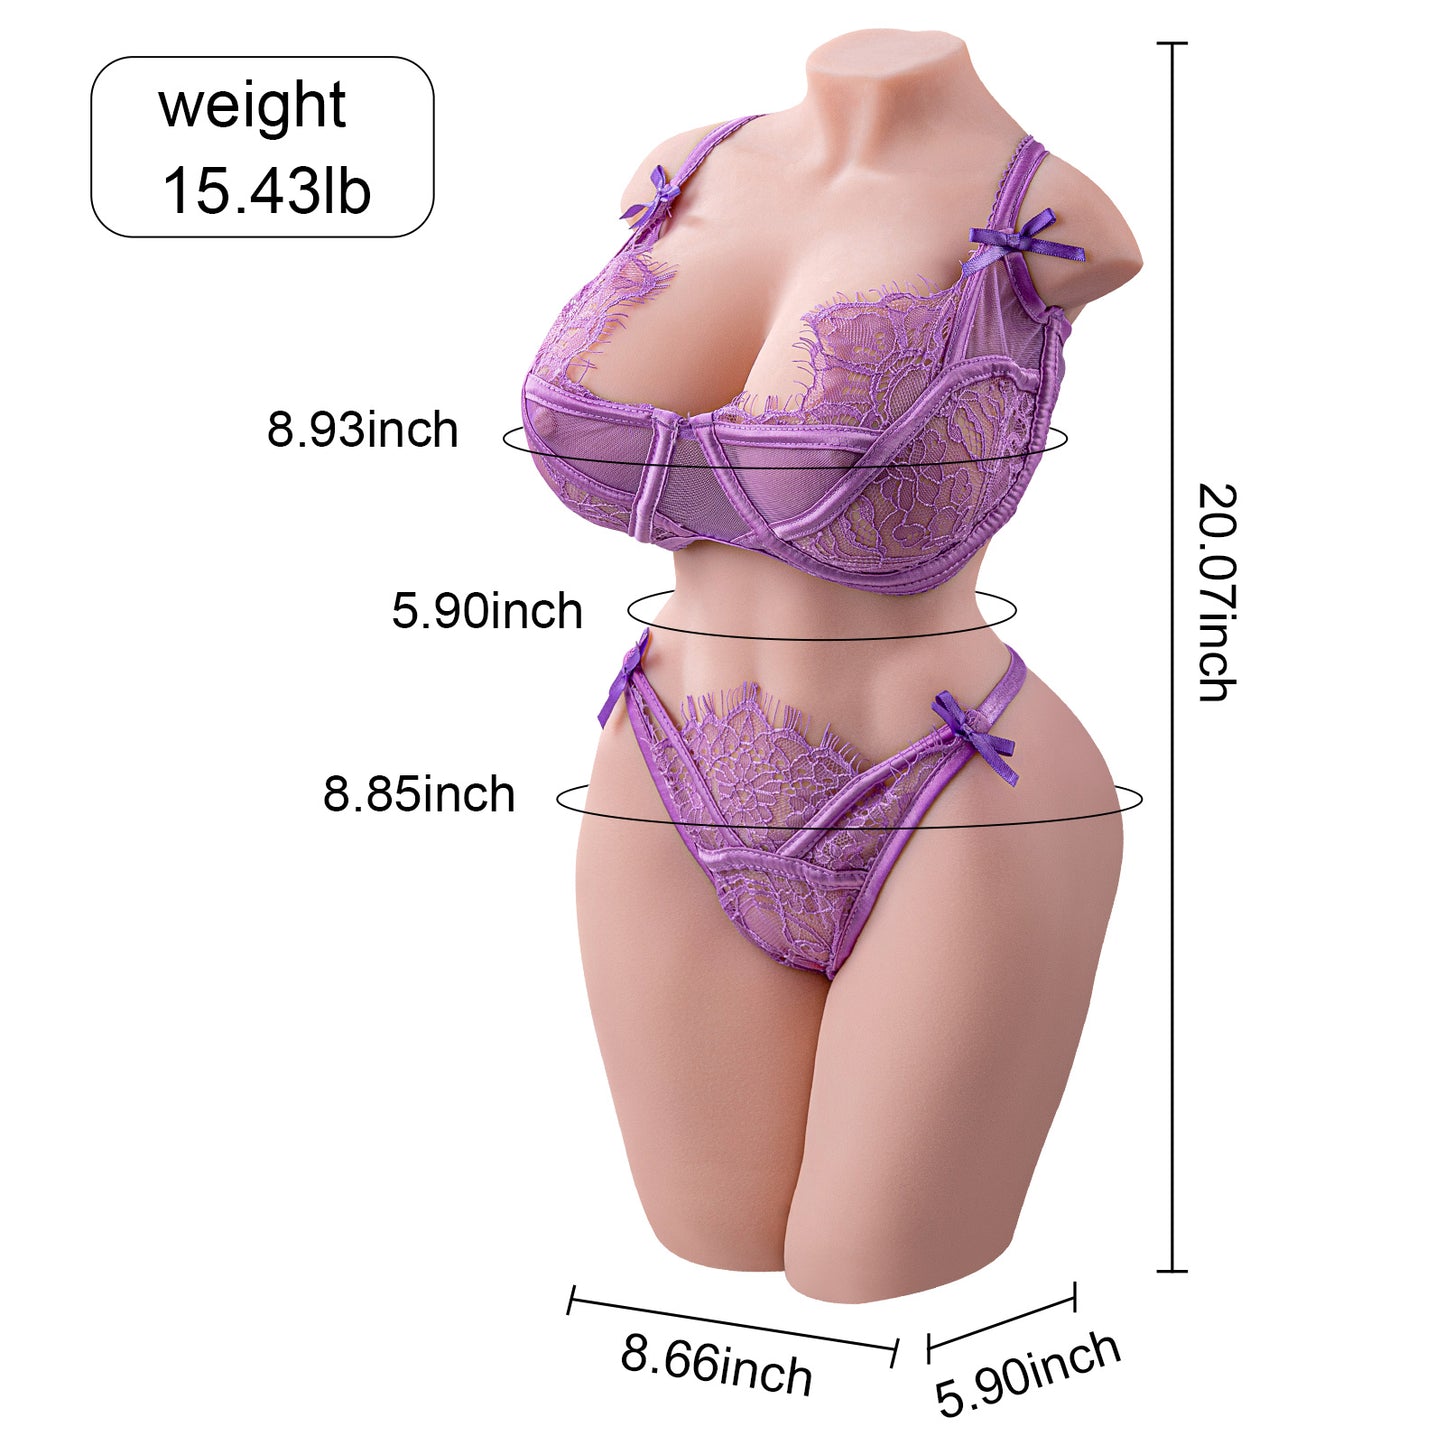 Rachel 7.5LB Cheap TPE Big Boobs Sex Doll Torso Love Dolls Realistic Breasts Masturbator Pocket Pussy Adult Toys